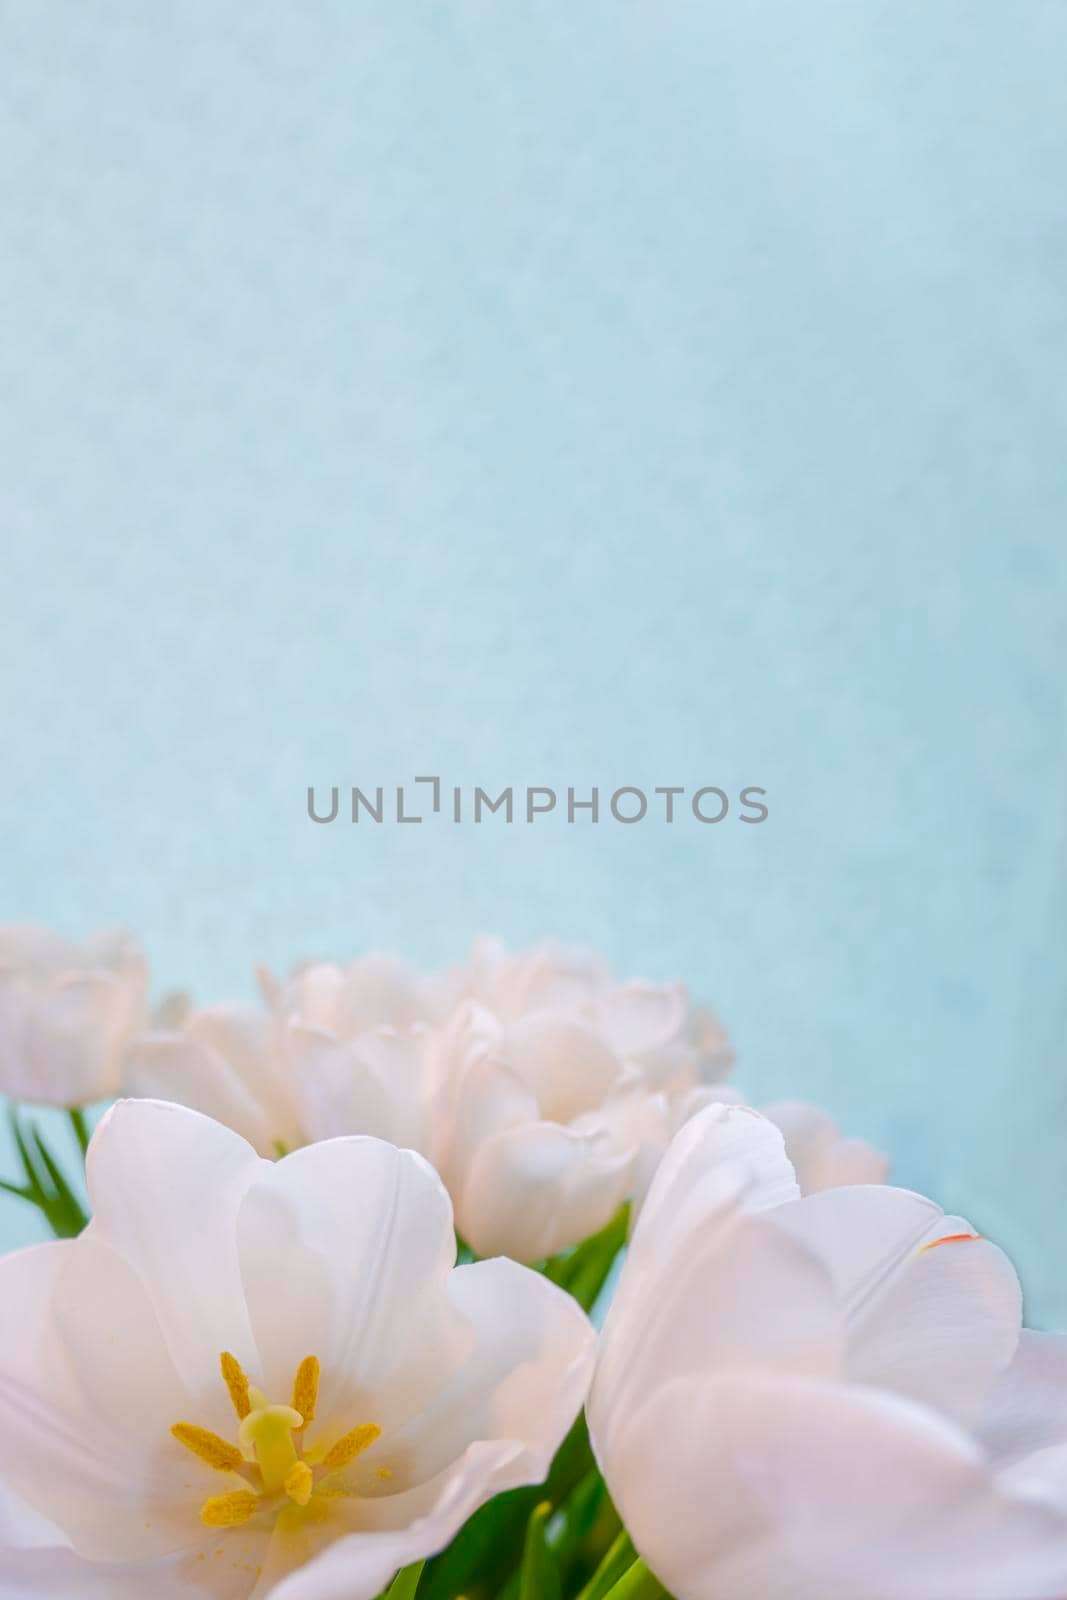 white tulip on a blue background by kajasja